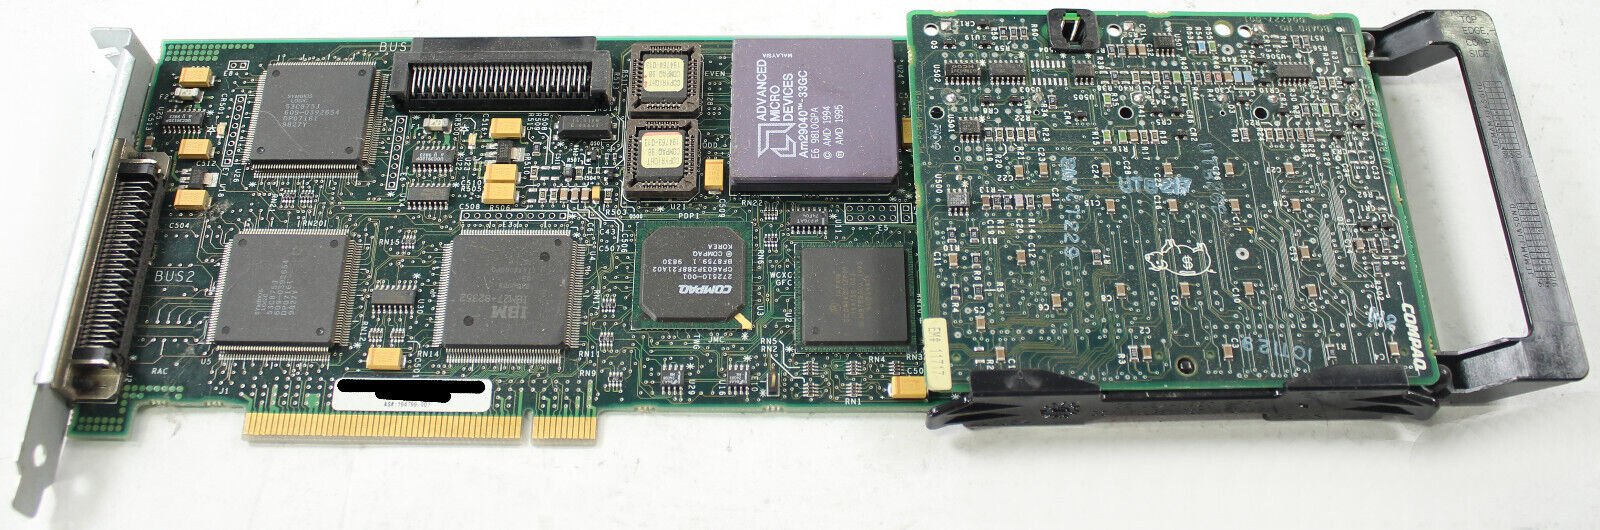 COMPAQ-194799-001-2-CHNL PCI WIDE SCSI SMART ARRAY CENTER